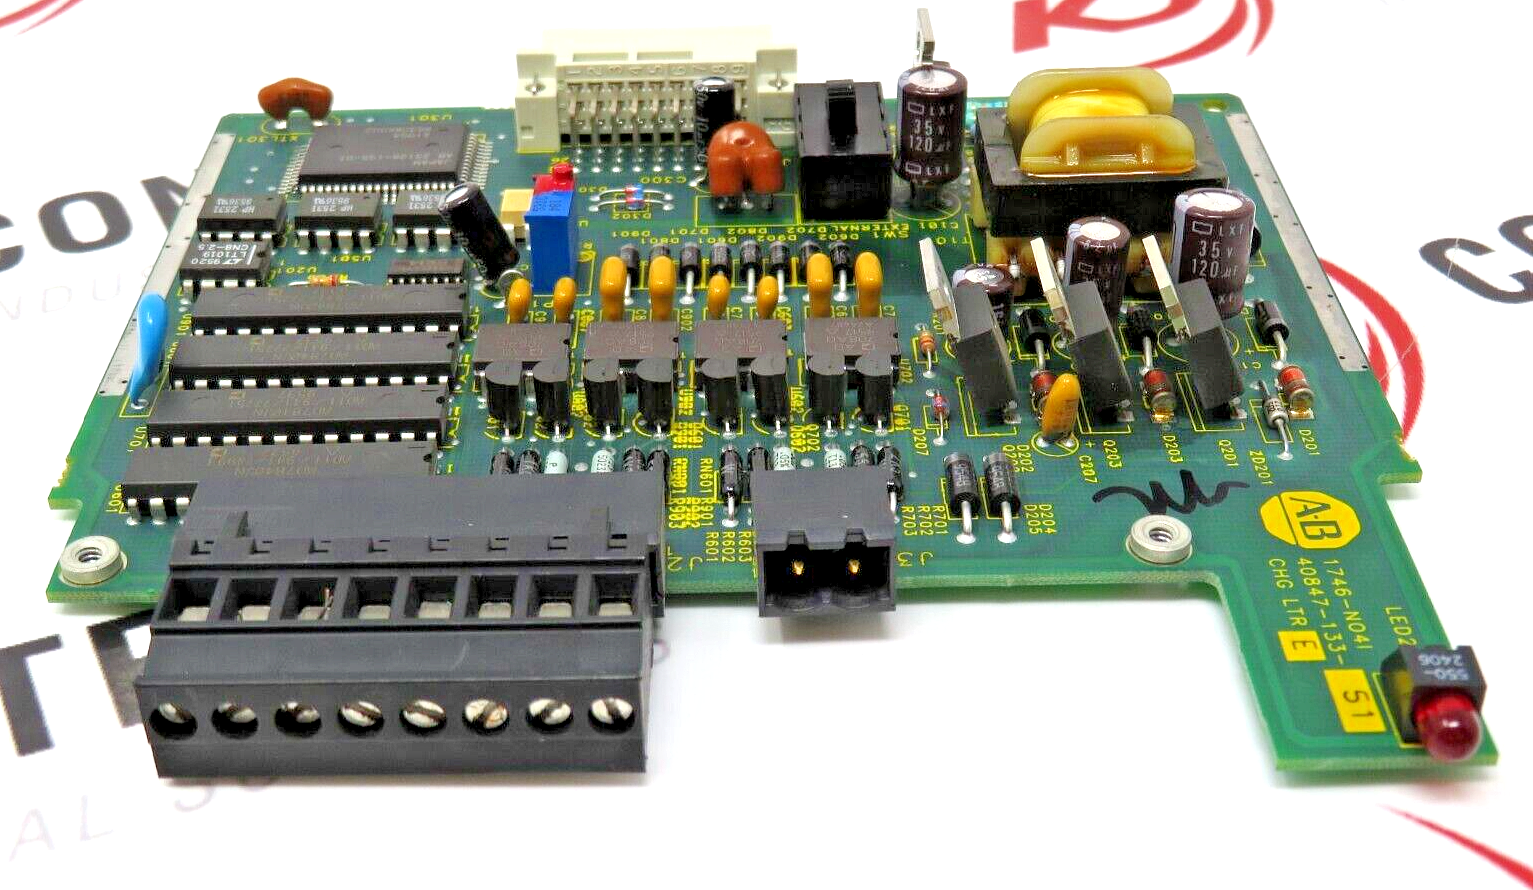 Allen-Bradley 1746-NO4I SLC 500 Analog Output Module Series A (PCB Board Only)